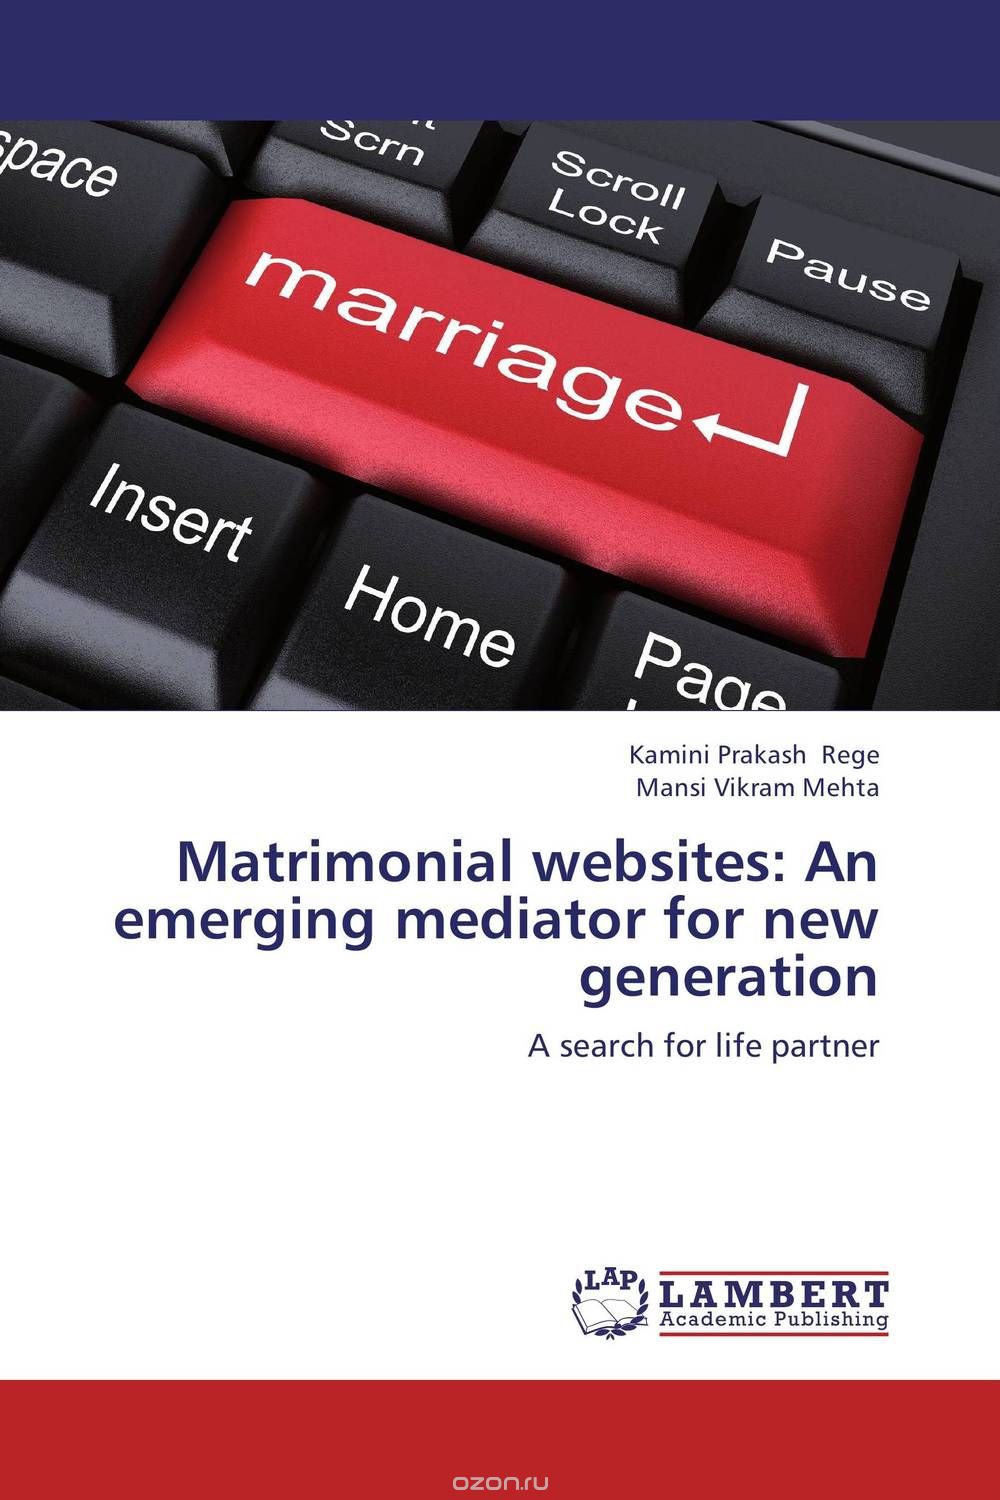 Matrimonial websites: An emerging mediator for new generation